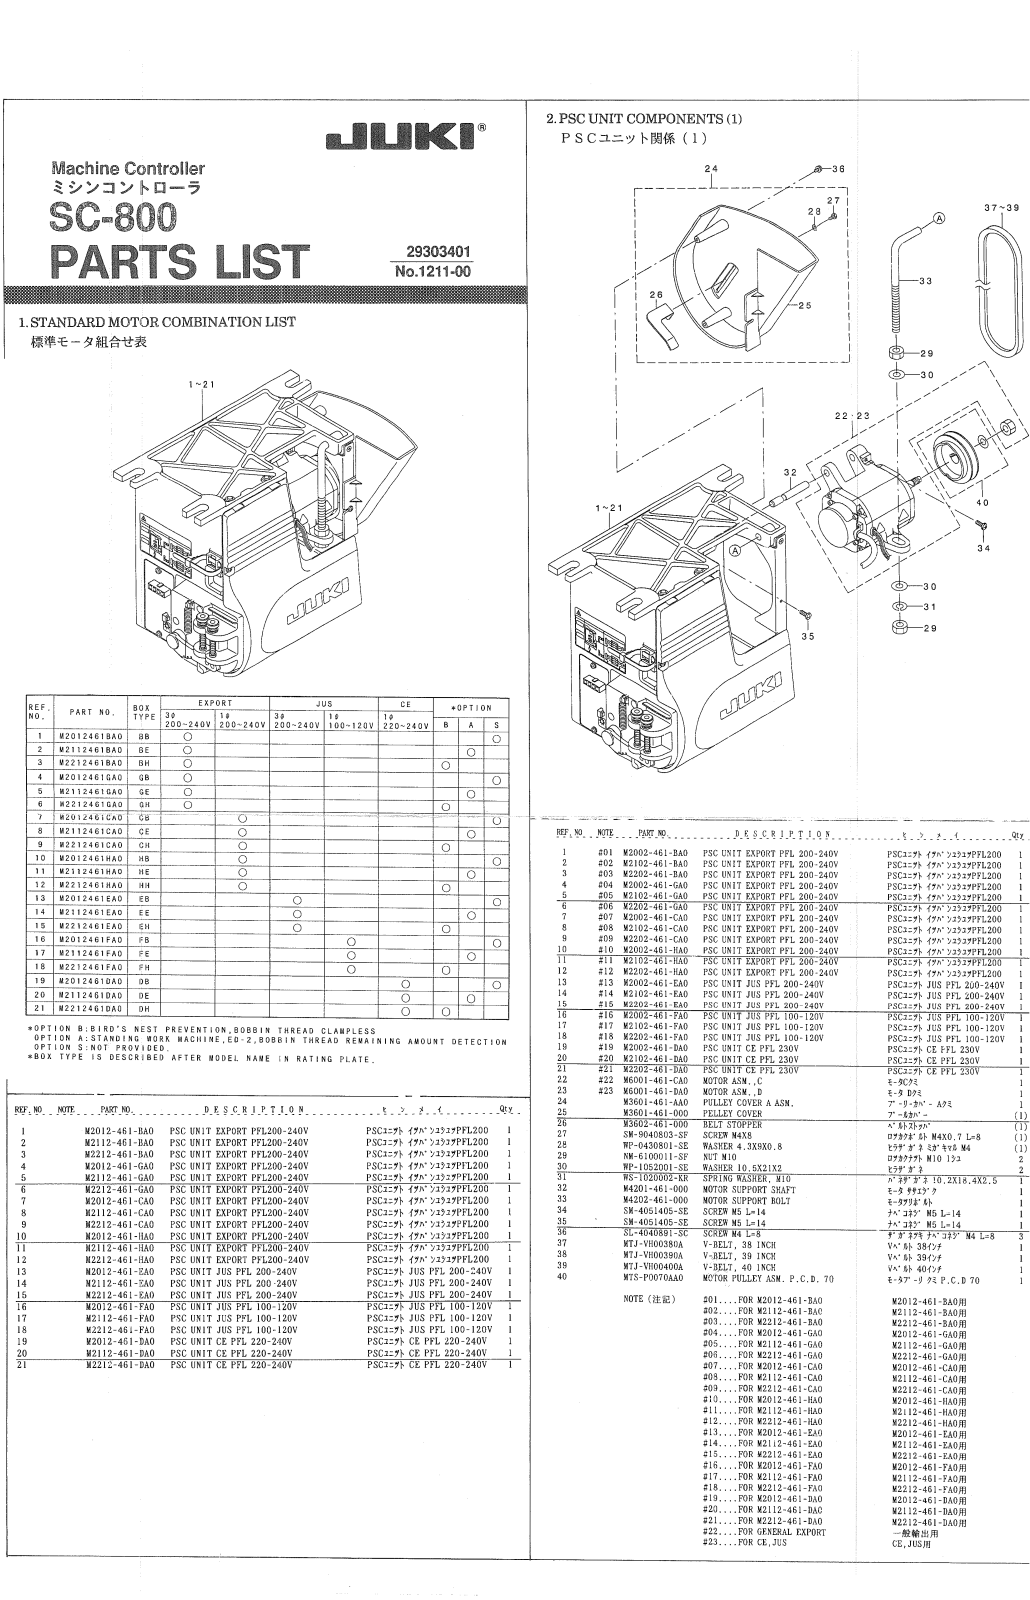 Juki SC-800 Parts List